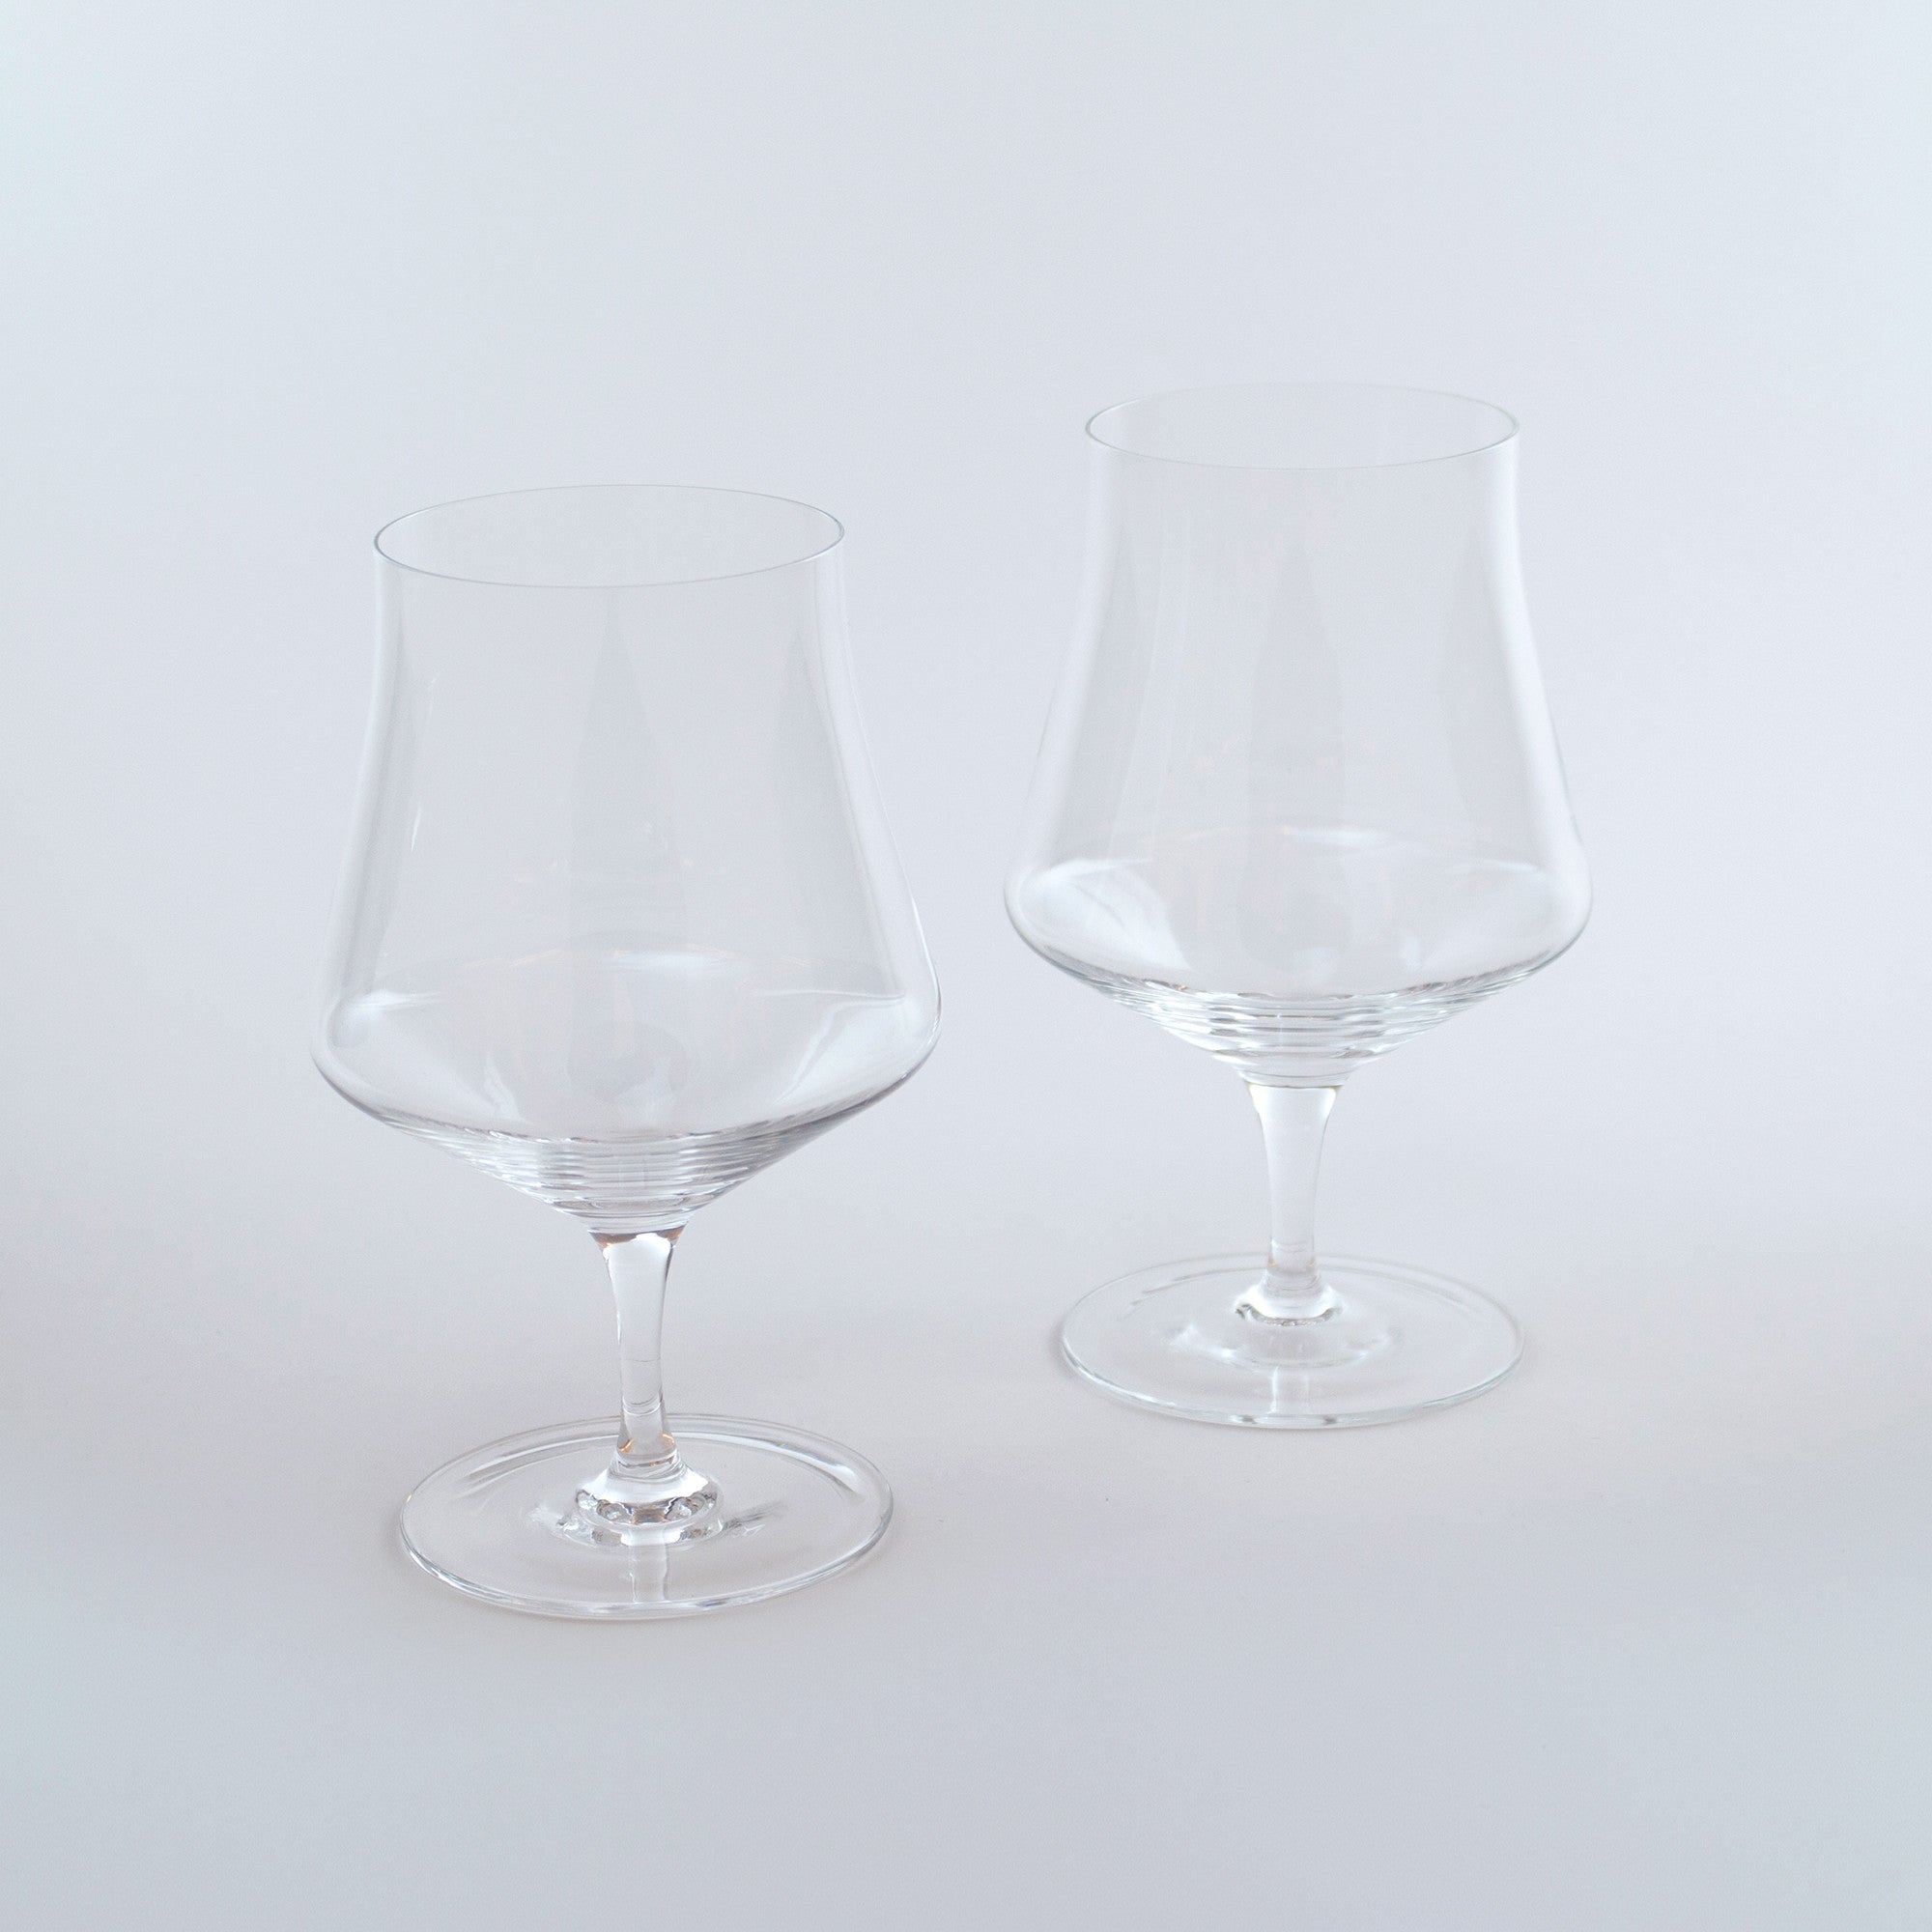 Modern Prosecco Glasses (Set of 2) - The VinePair Store